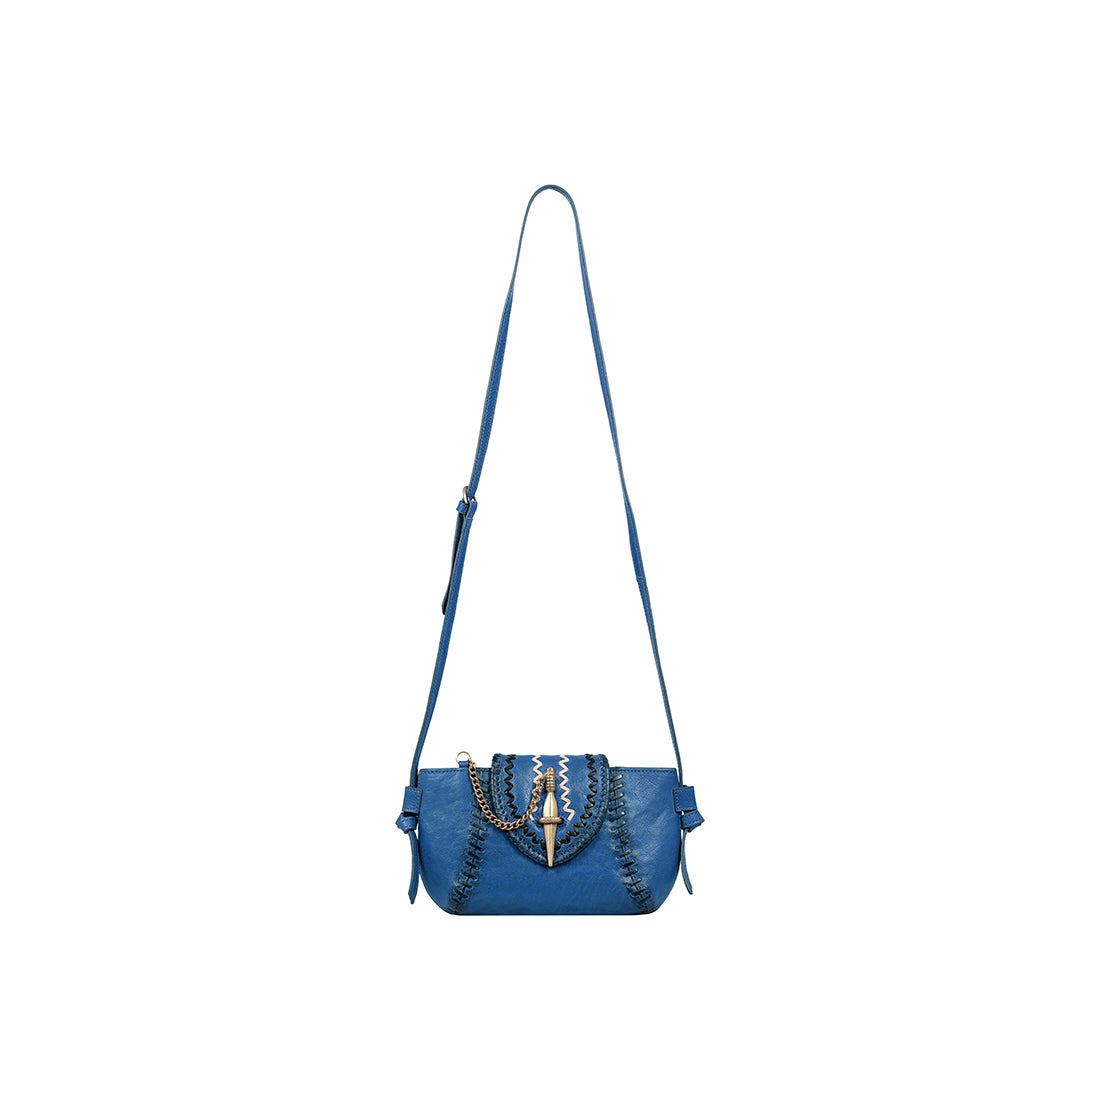 Buy Marsala Swala 04 Sling Bag Online - Hidesign